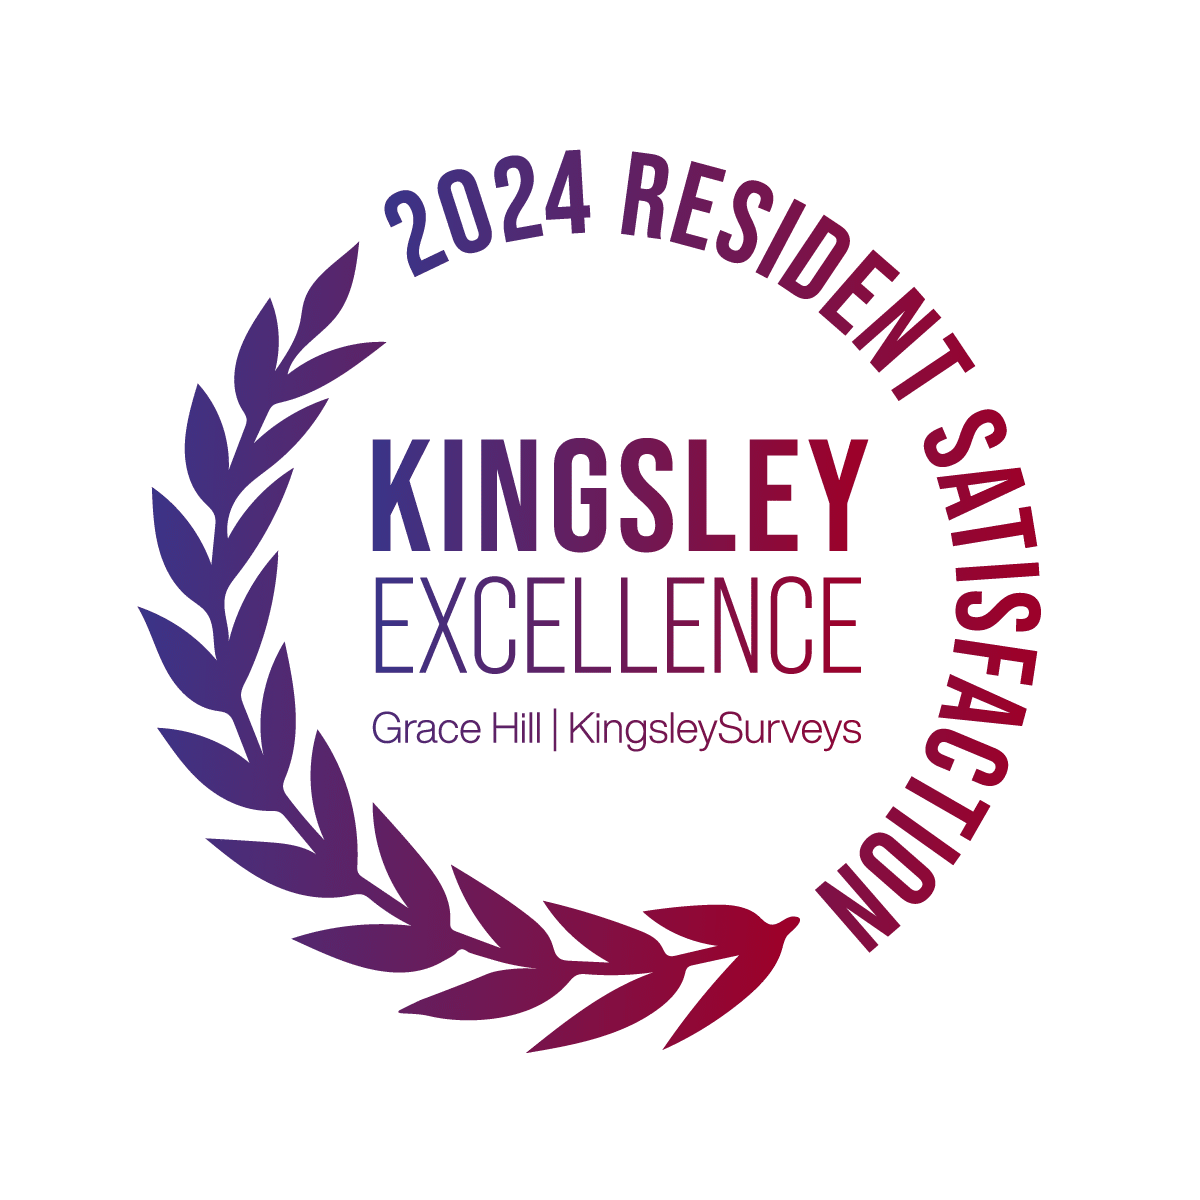 The Kingsley Award